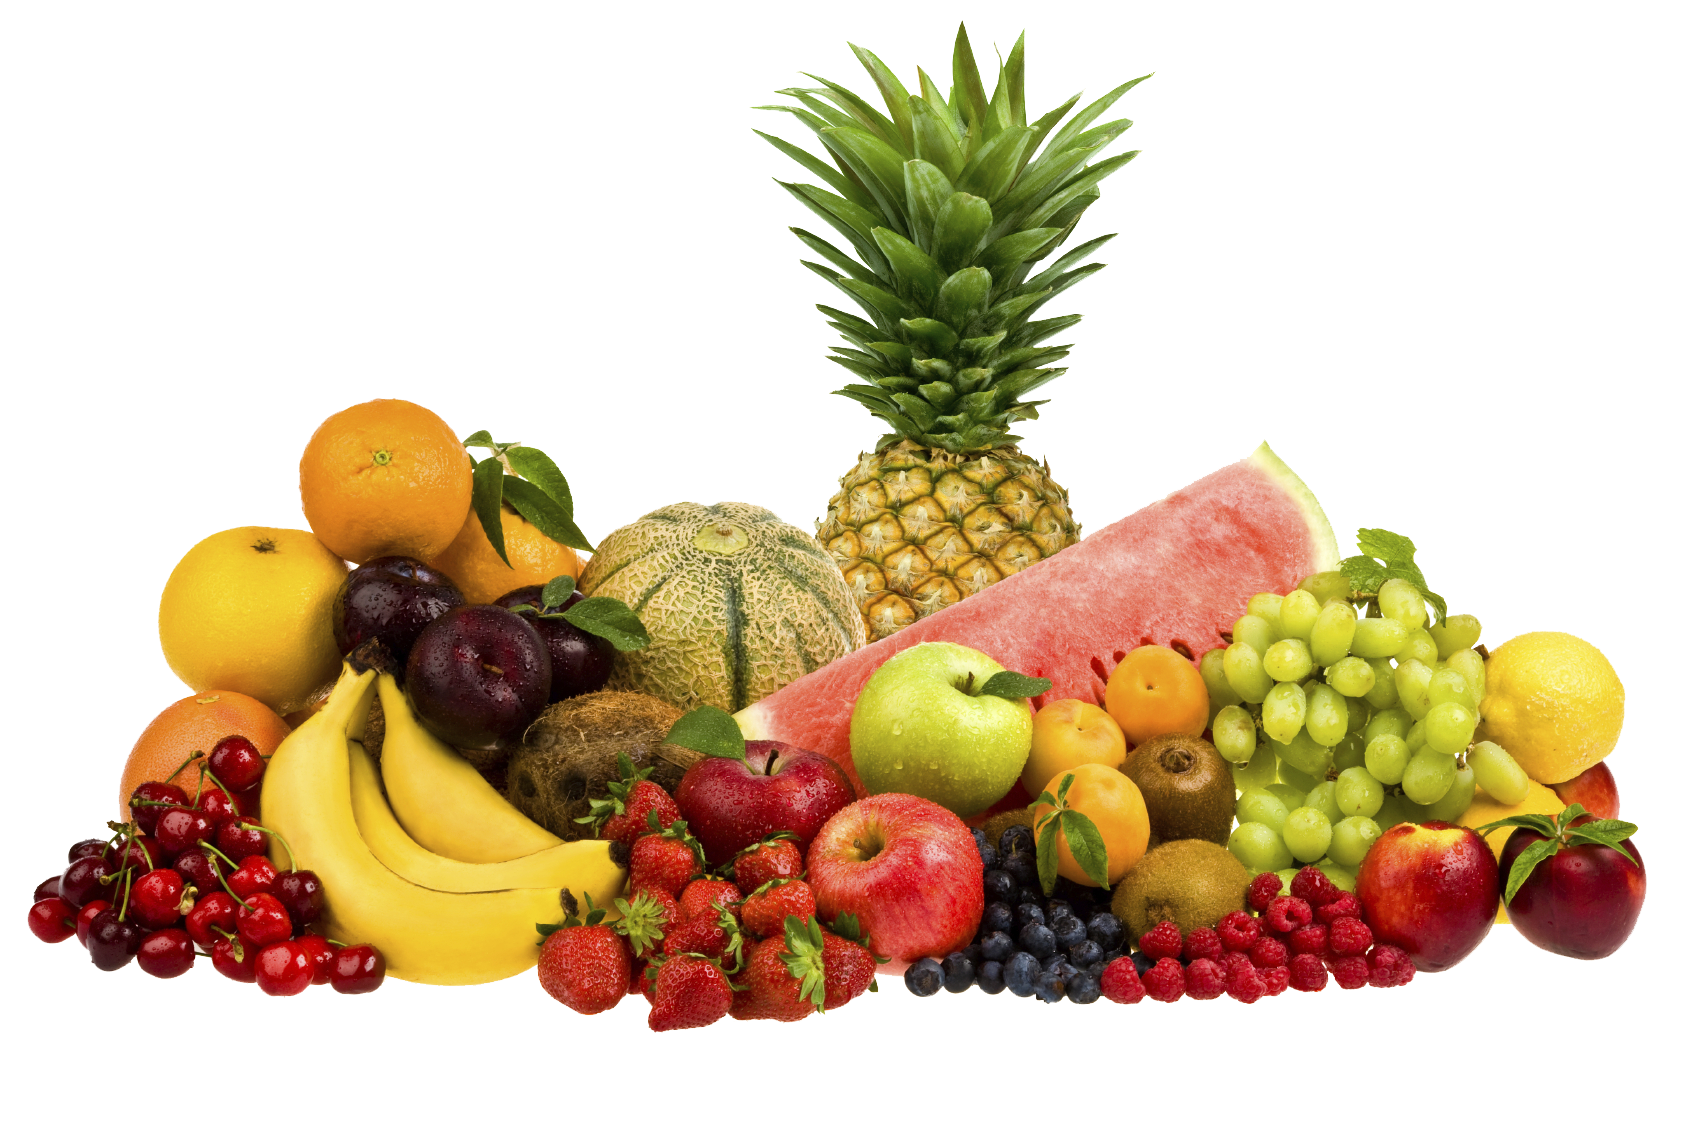 Top 10 Health Benefits of Fruits